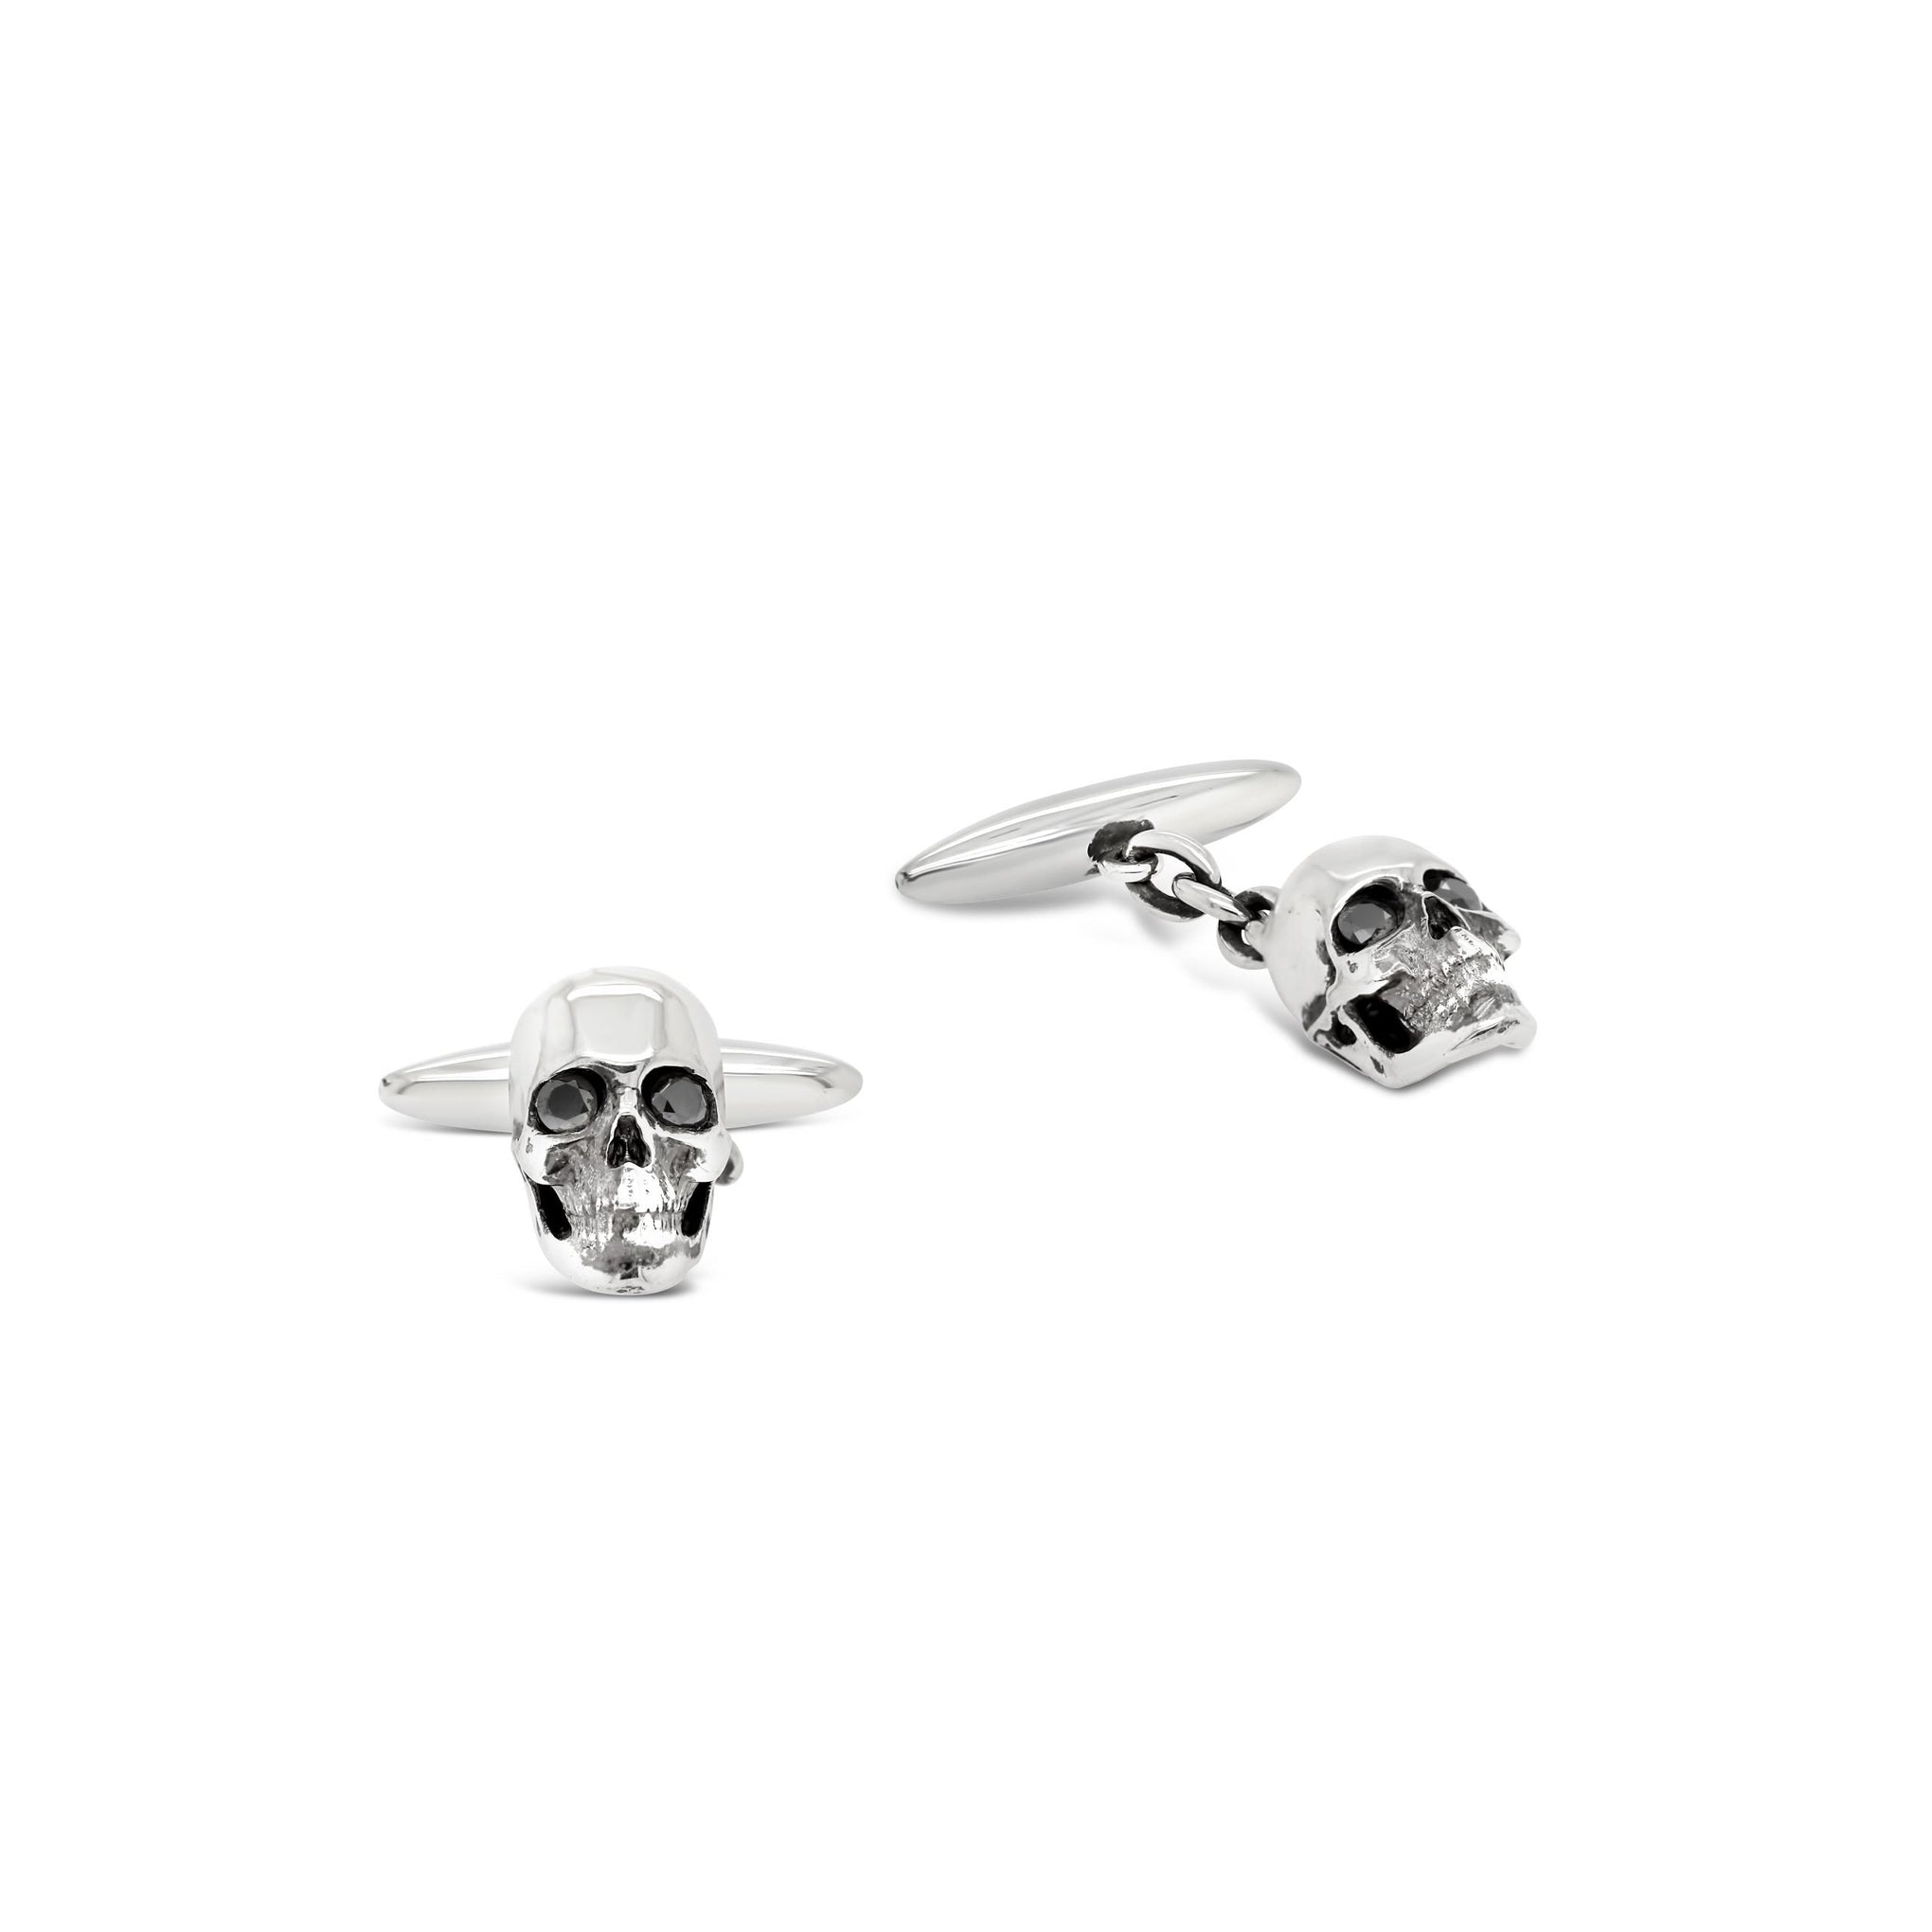 Sterling silver skull cufflinks with black diamonds